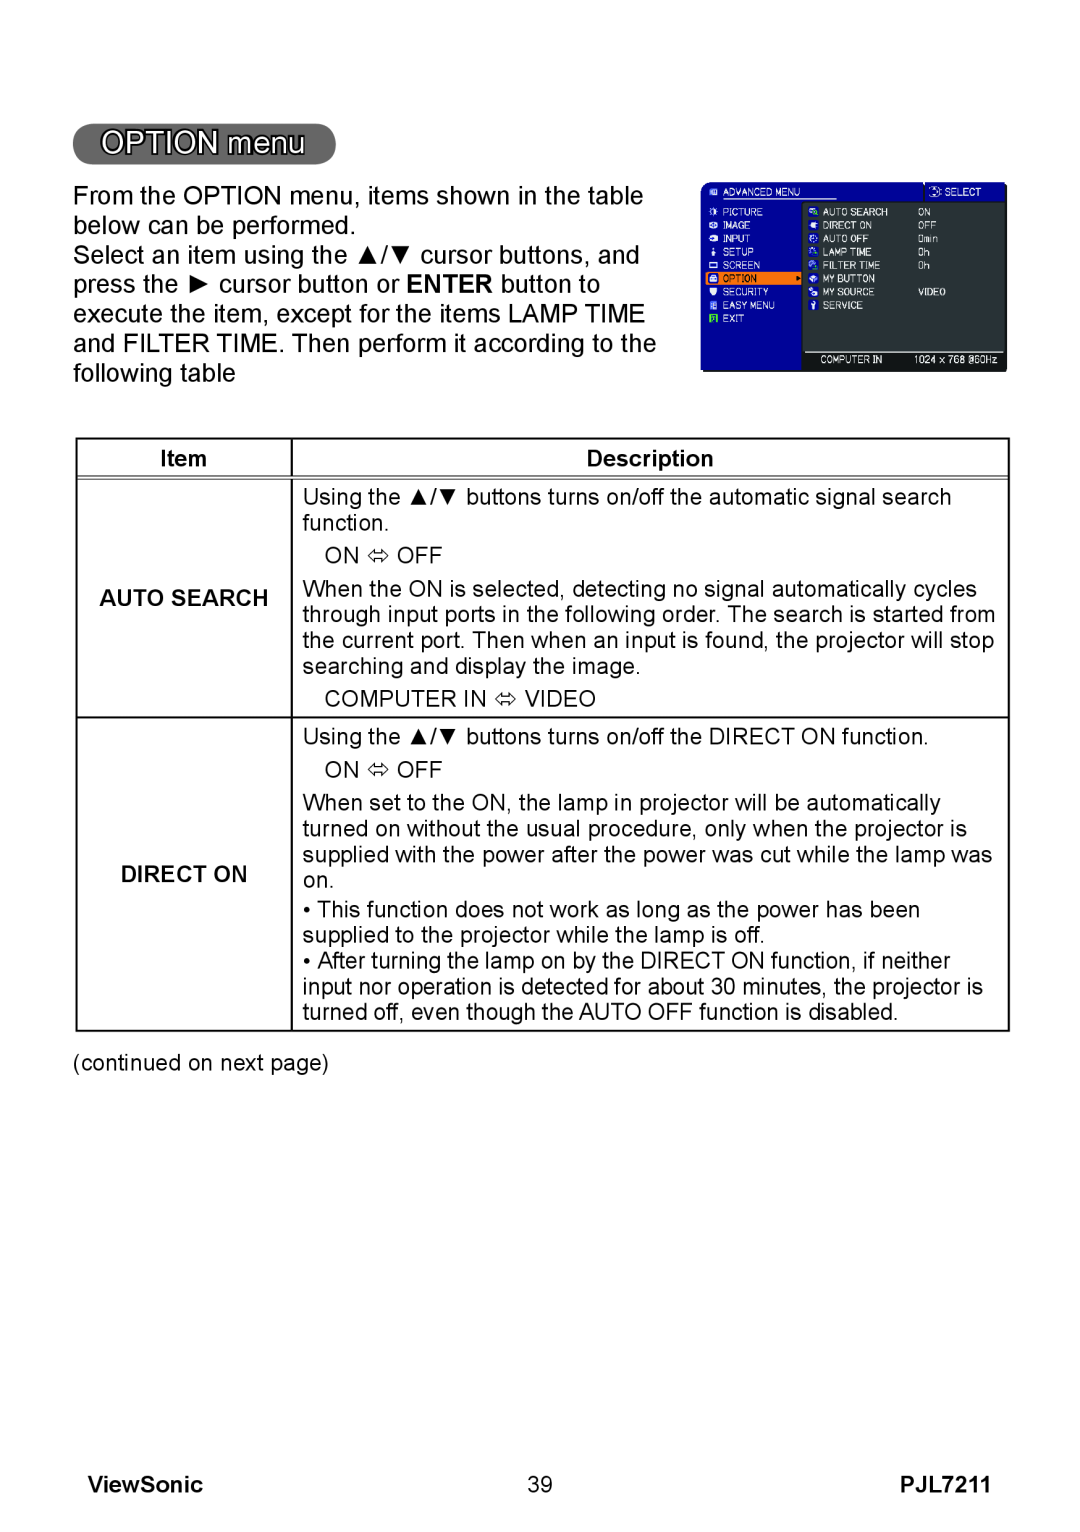 ViewSonic PJL7211 manual OPTION menu, Item, Description, Auto Search, Direct On, ViewSonic 